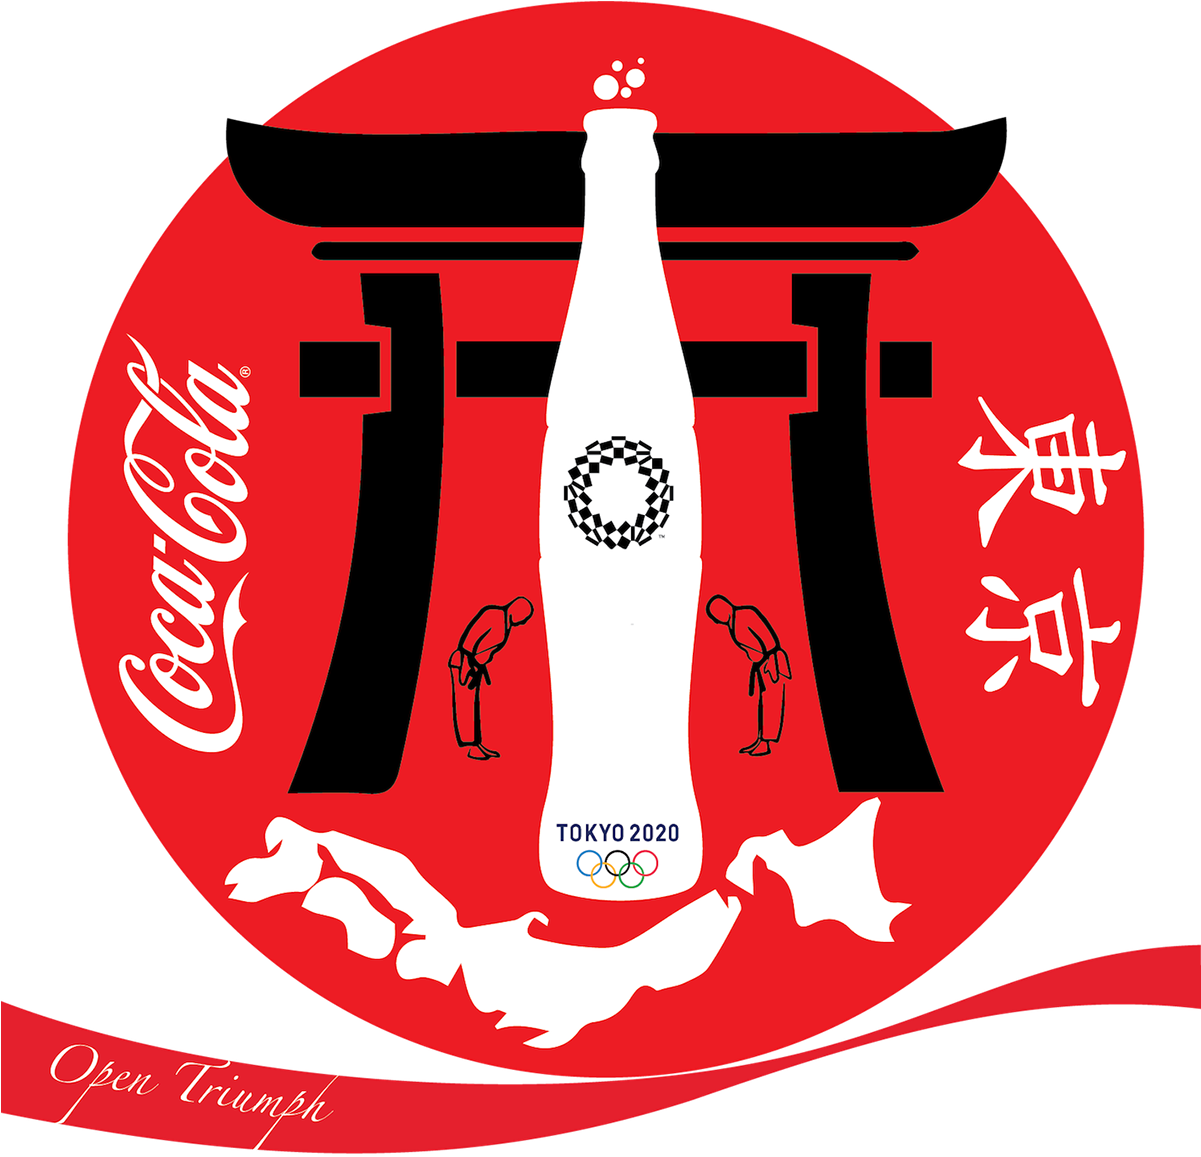 Coca Cola Tokyo2020 Olympics Promotional Artwork PNG image